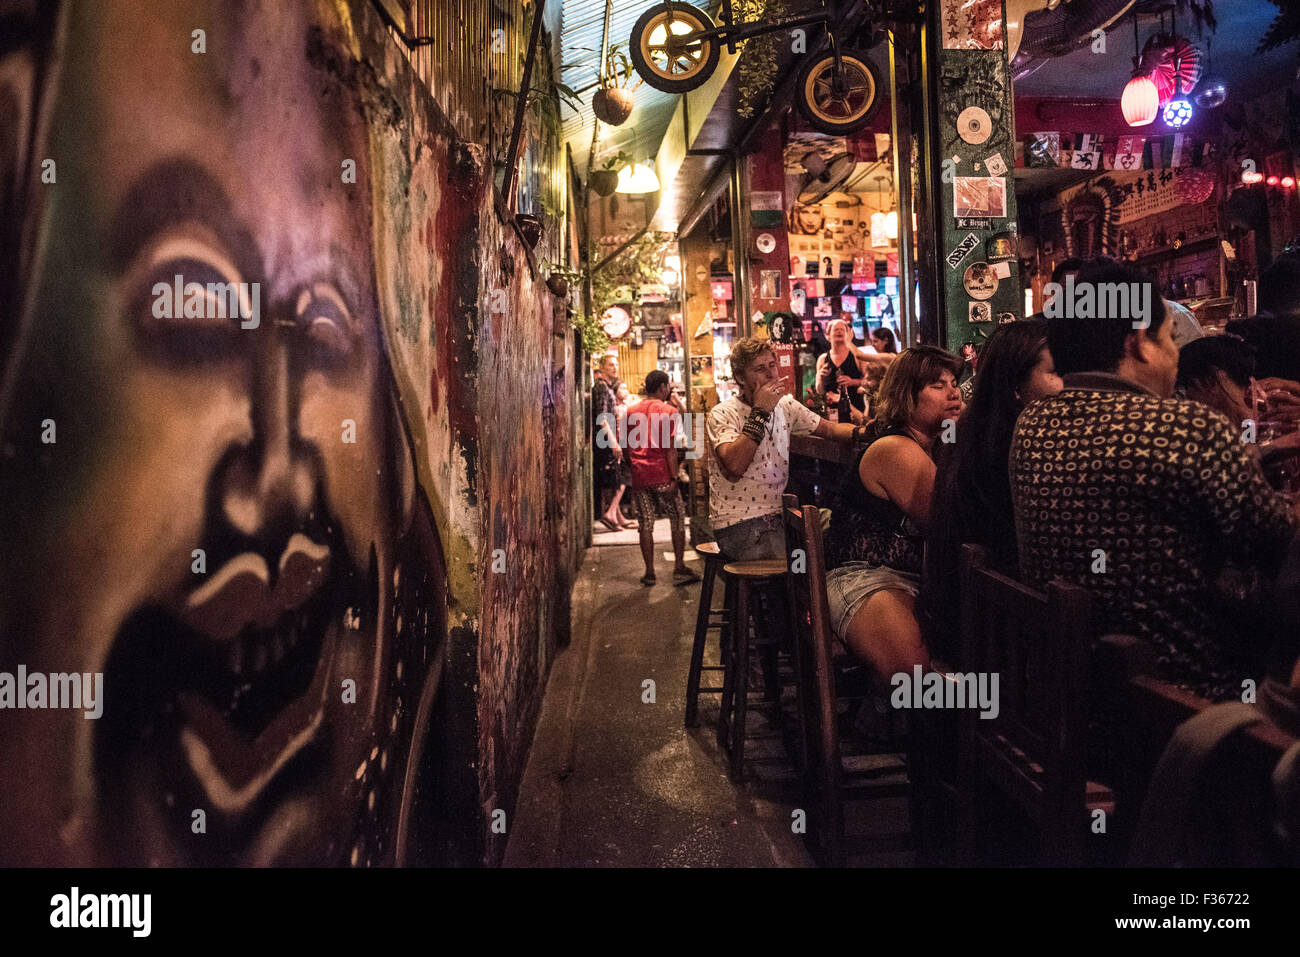 A backstreet bar with graffiti in Bangkok, Thailand. Stock Photo